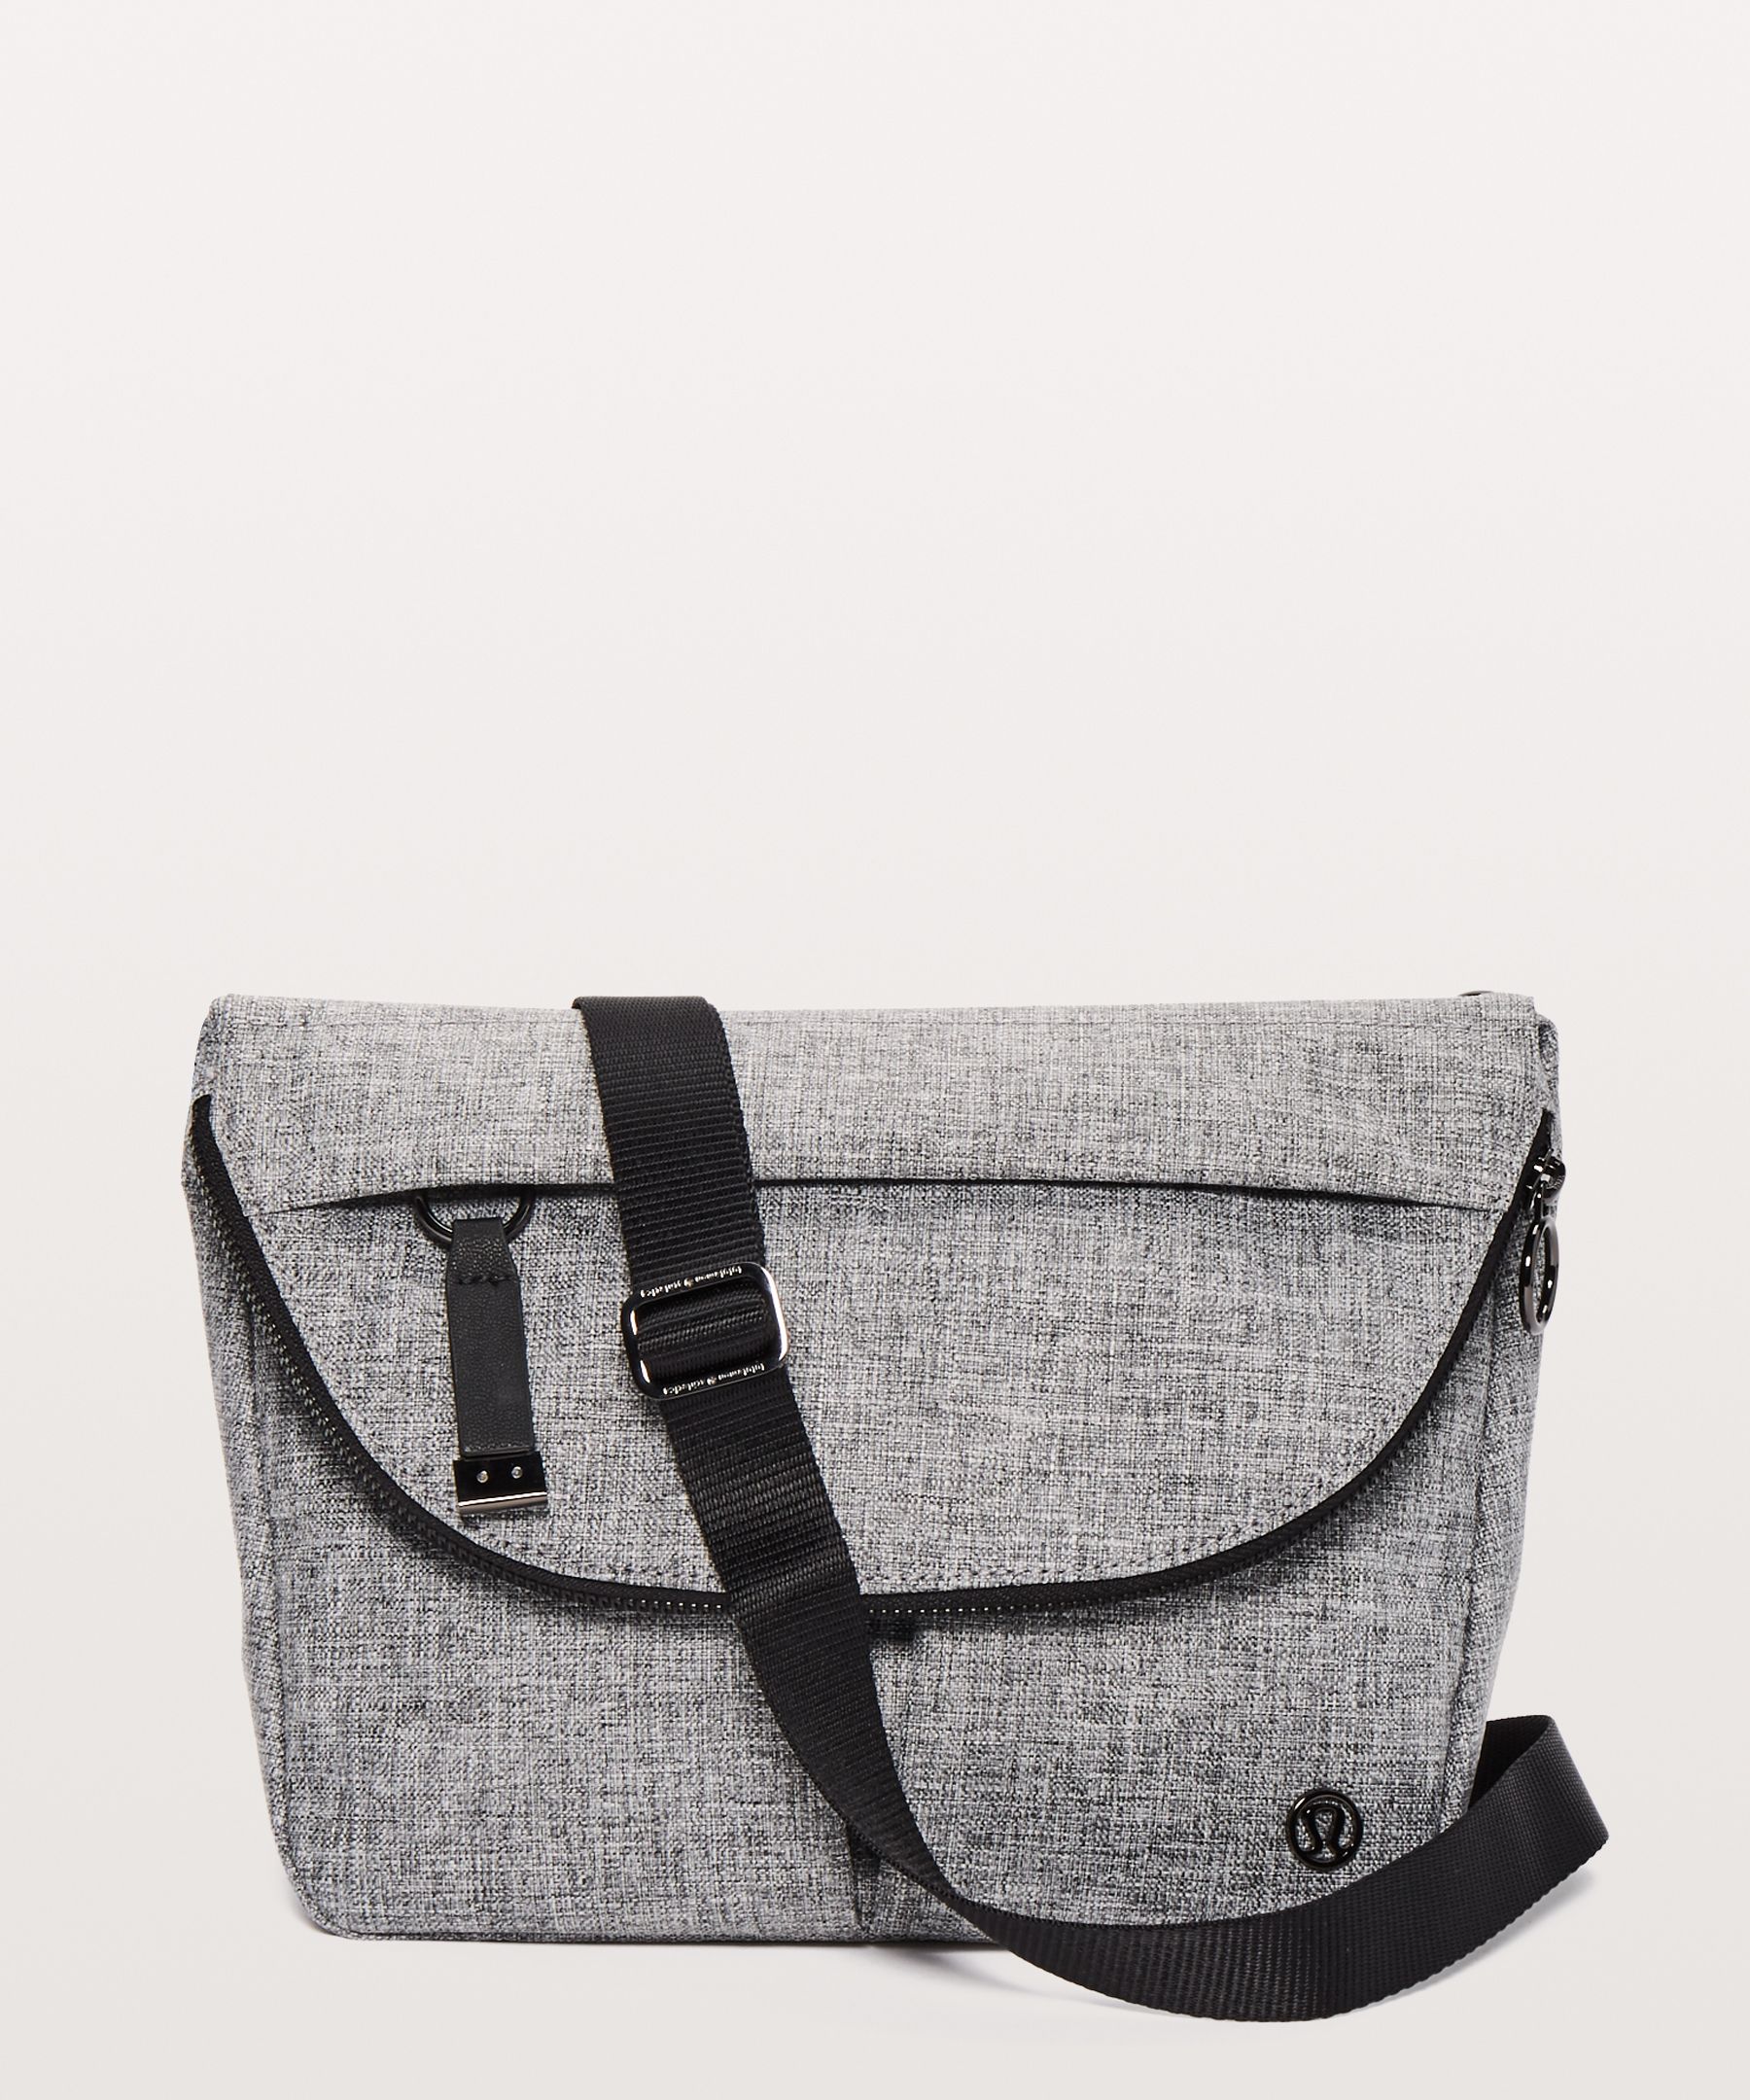 lululemon grey bag, OFF 77%,Buy!